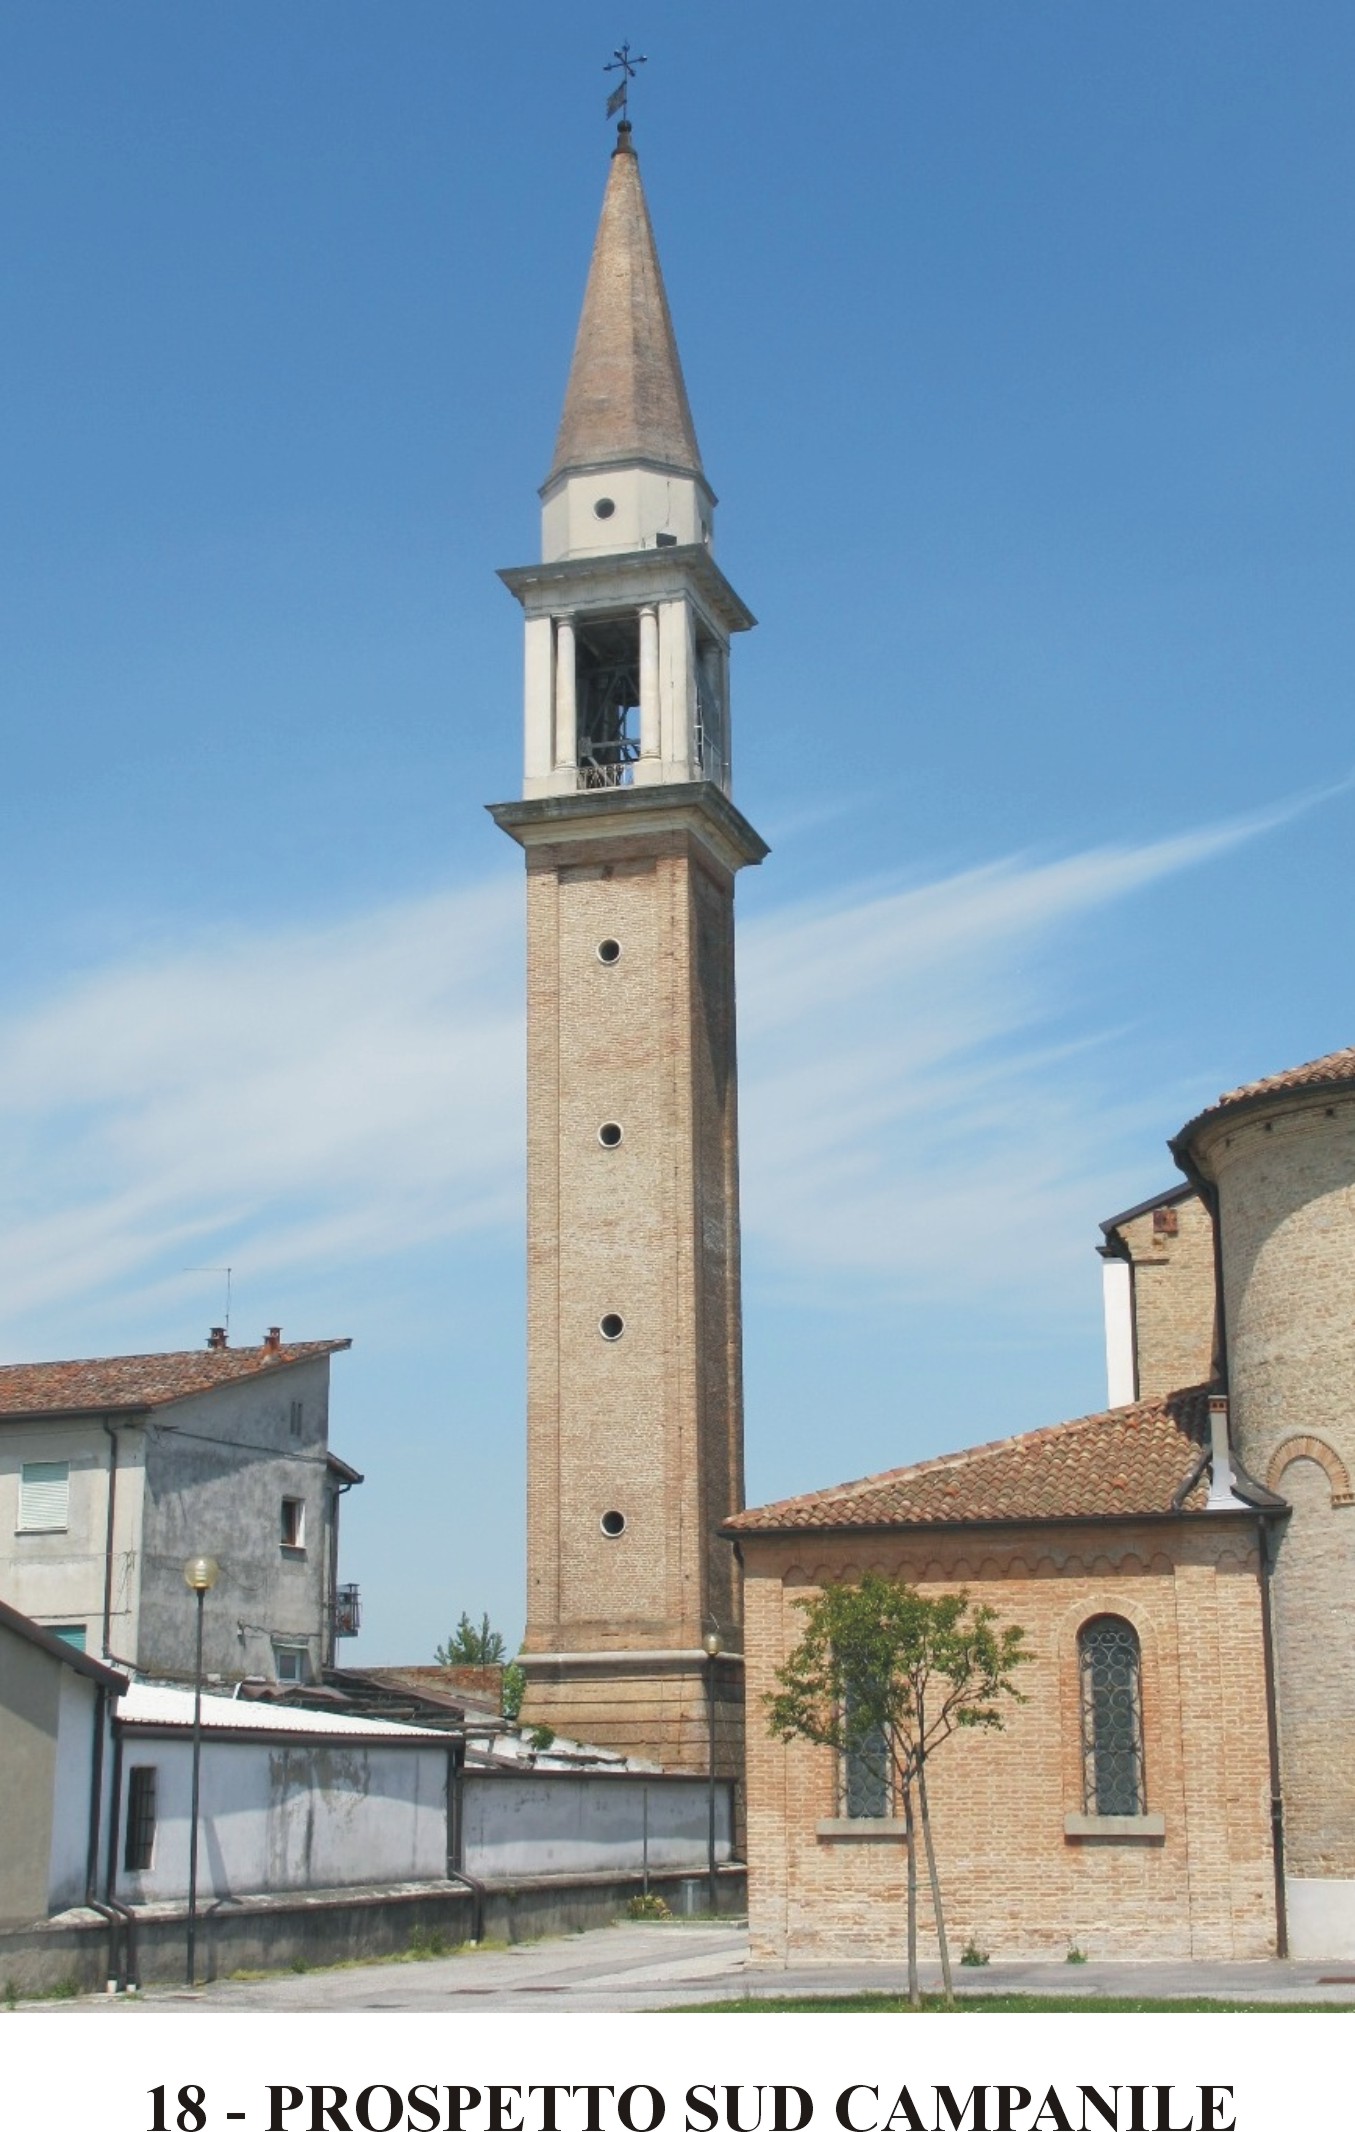 Complesso Chiesa e Campanile dei Santi Simone e Giuda (campanile) - Saonara (PD) 